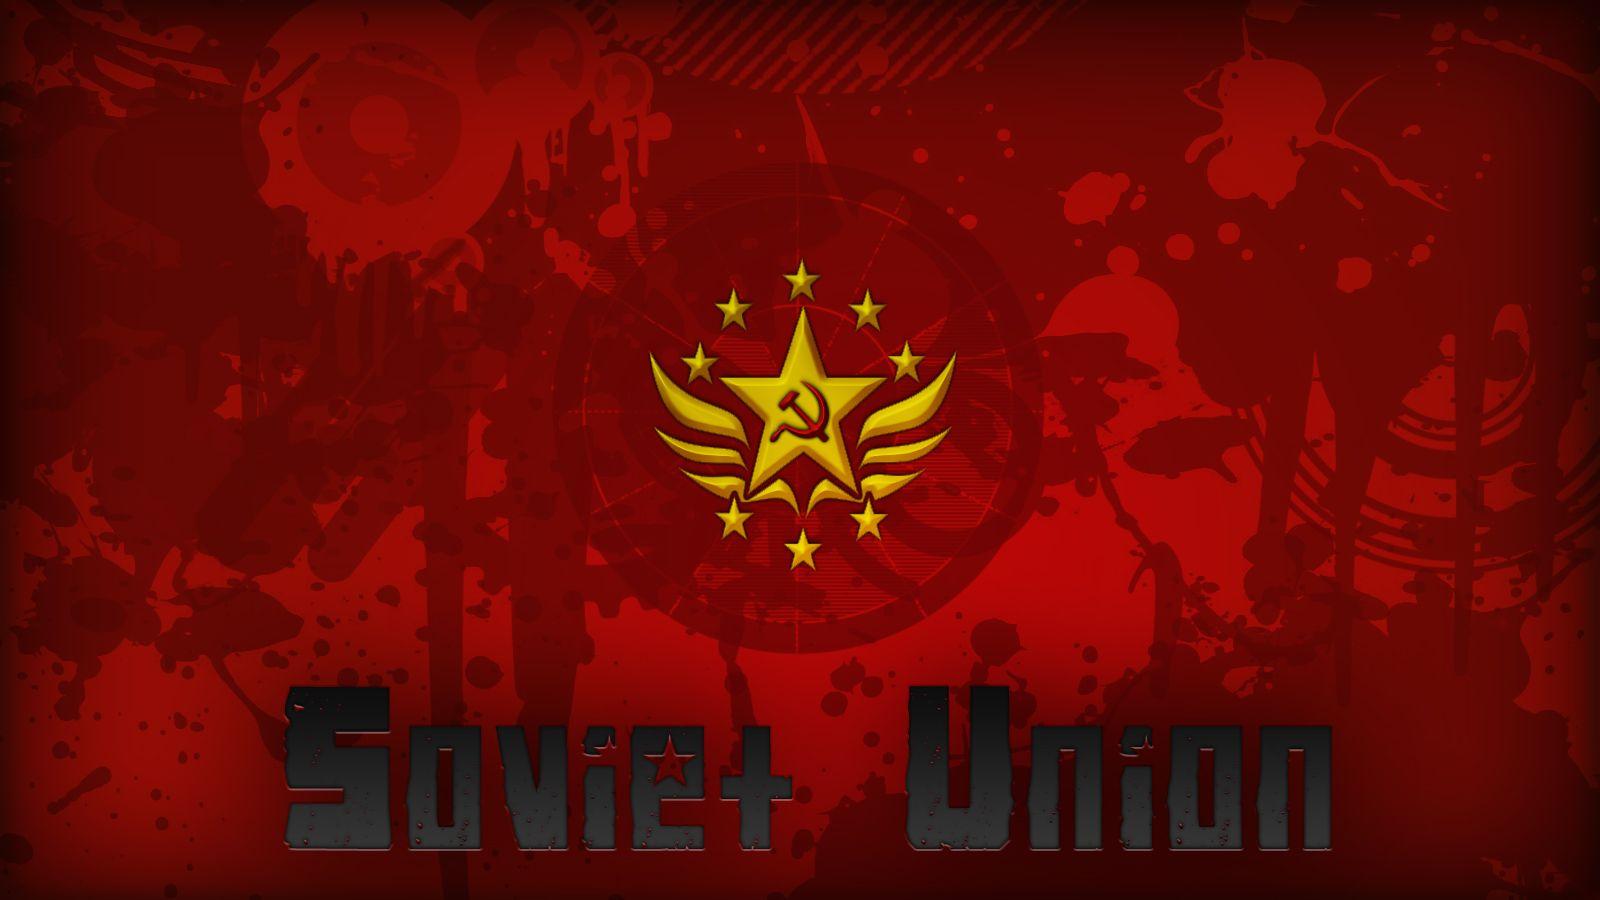 soviet union background 8. Background Check All